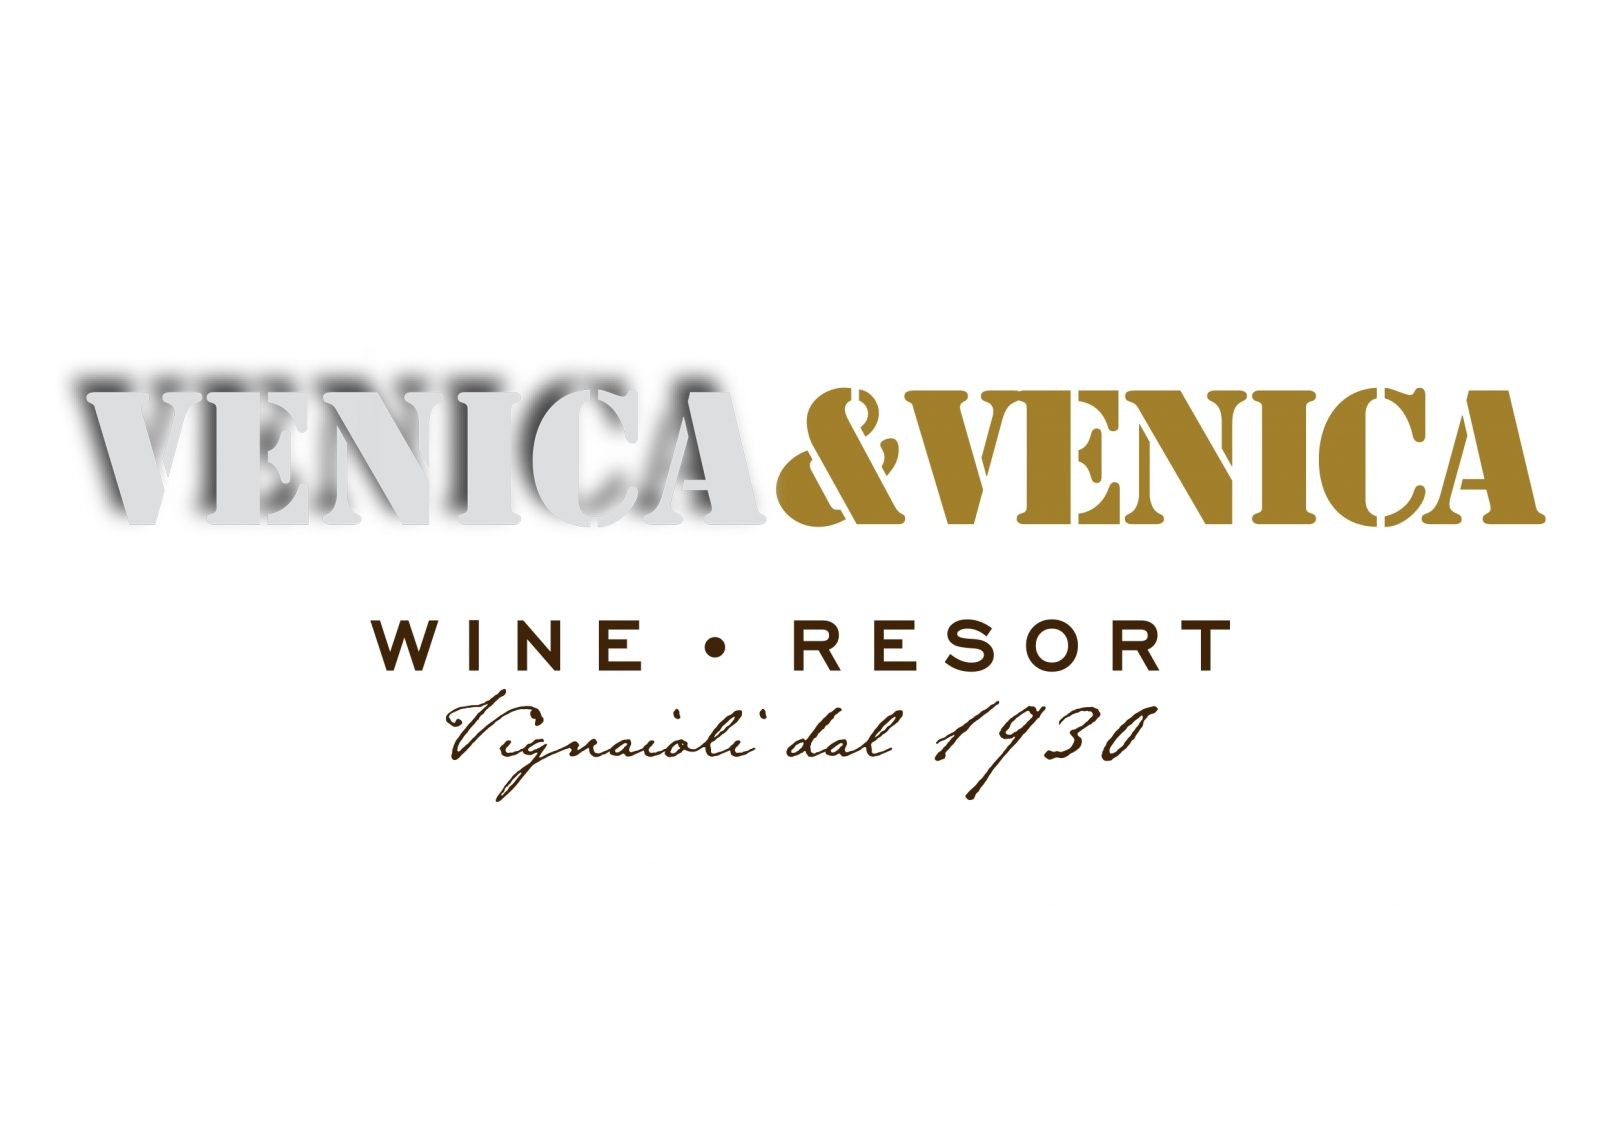 2018 _Logo VENICA _WineResort & Vignaioli dal 1930 _A5